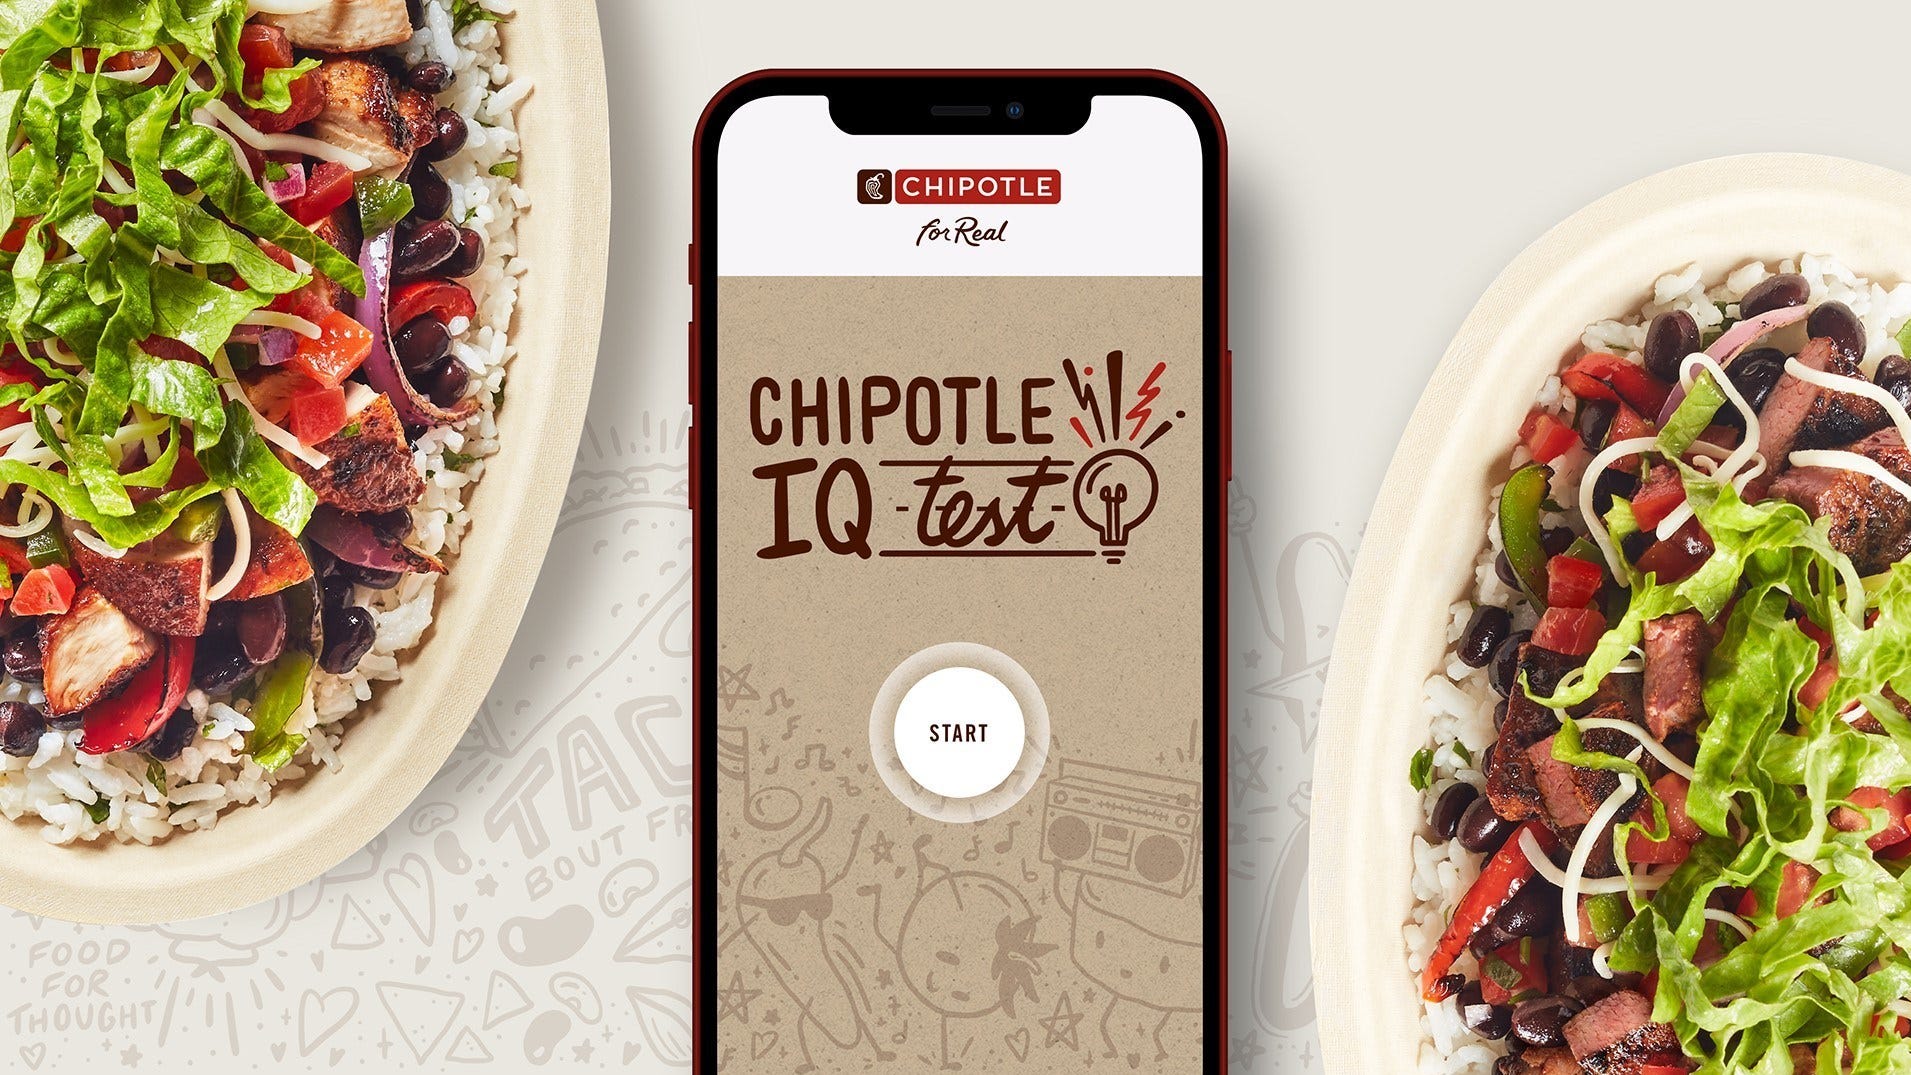 Cinco de Mayo 2021 deals Chipotle buyonegetone free burritos, more